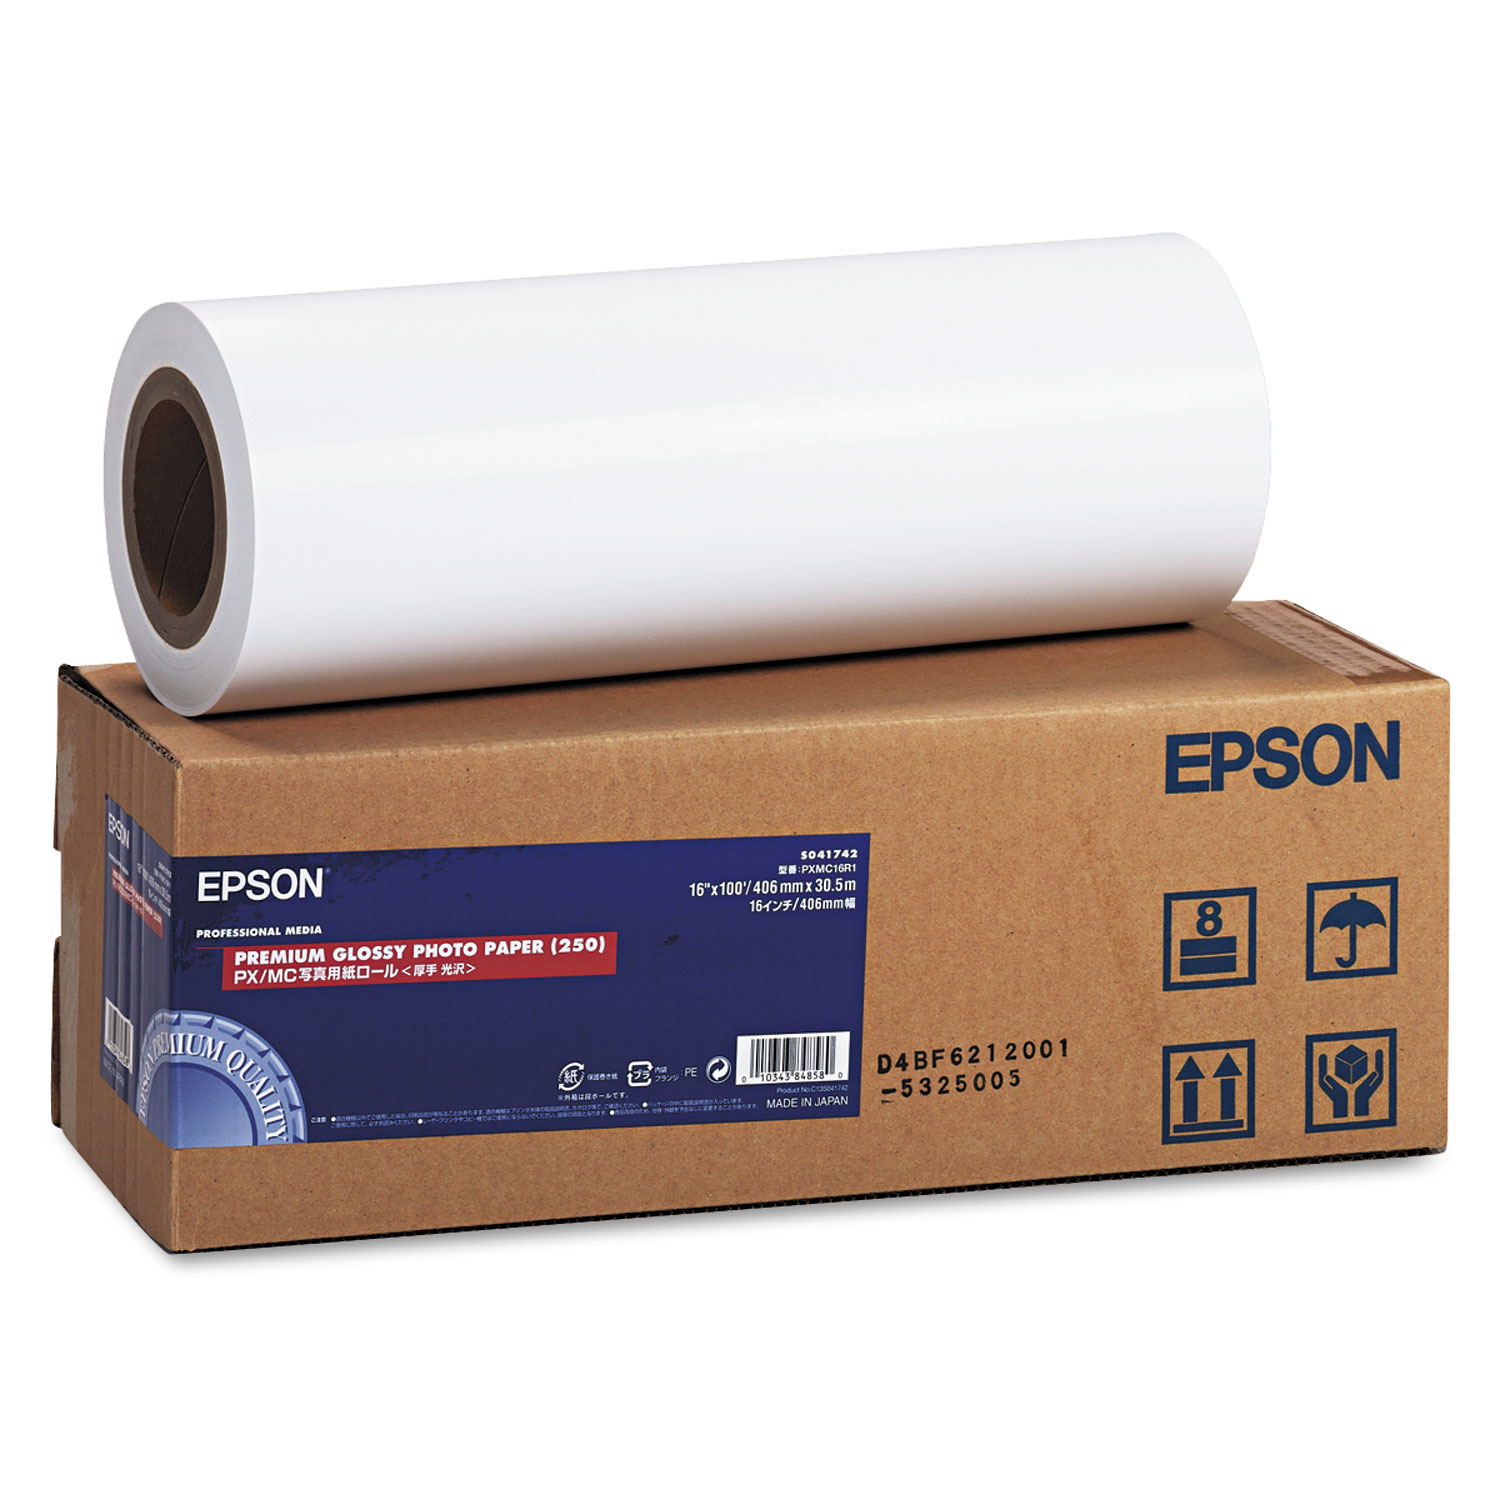  Epson S041742 Premium Glossy Photo Paper Roll, 3 Core, 16 x 100 ft, Glossy White (EPSS041742) 